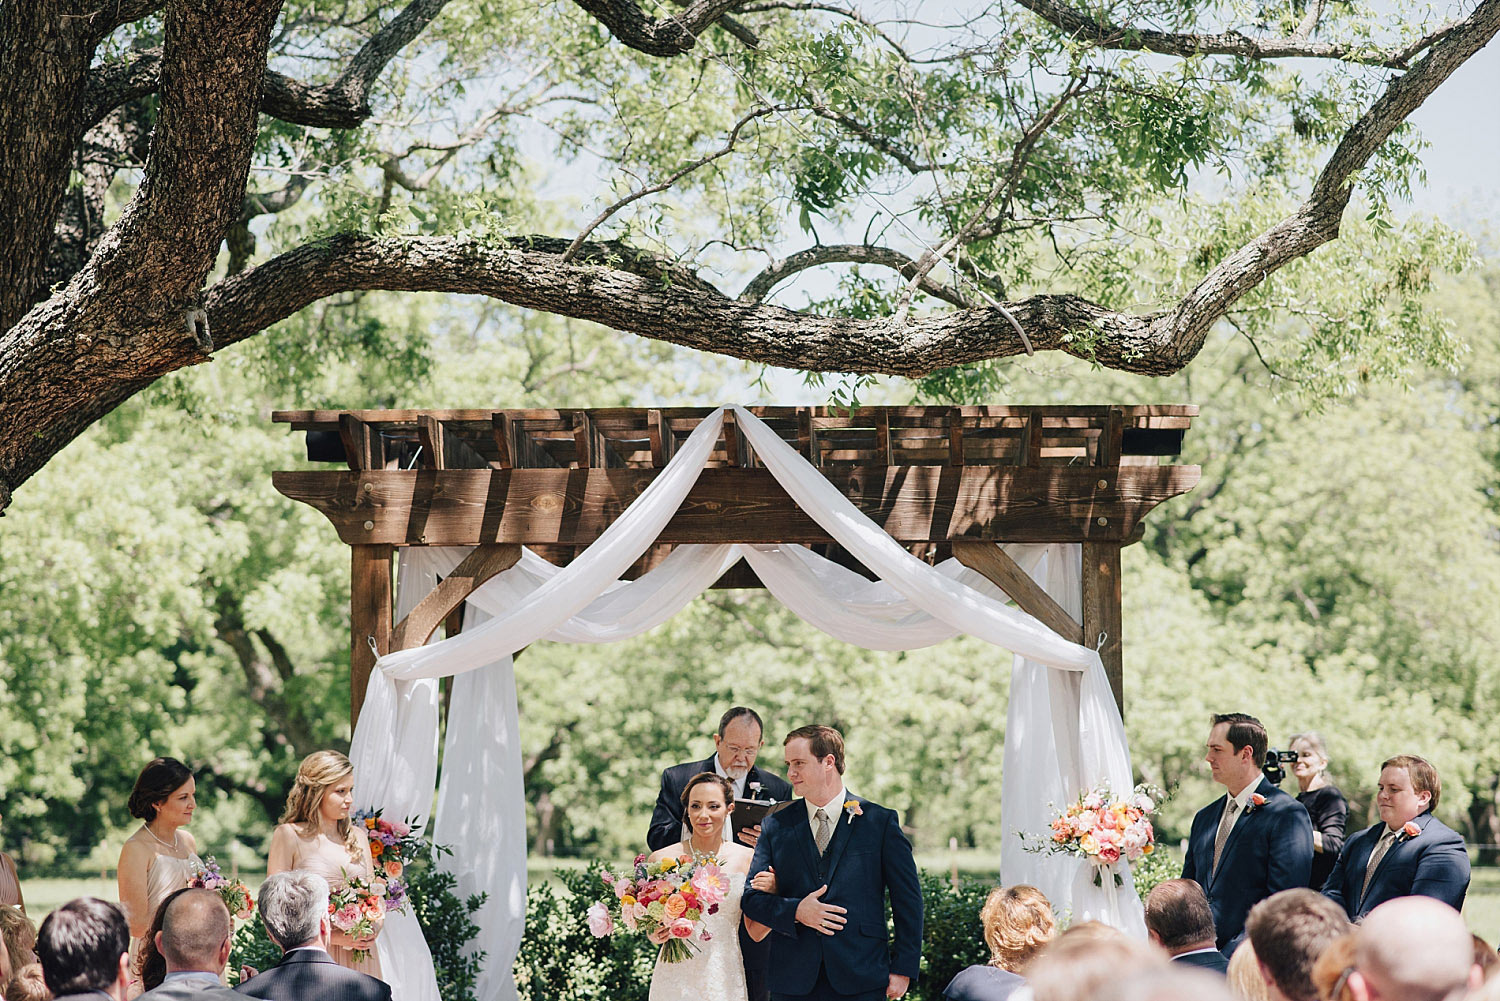 The Orchard Azle wedding ceremony at wood trellis with white fabric